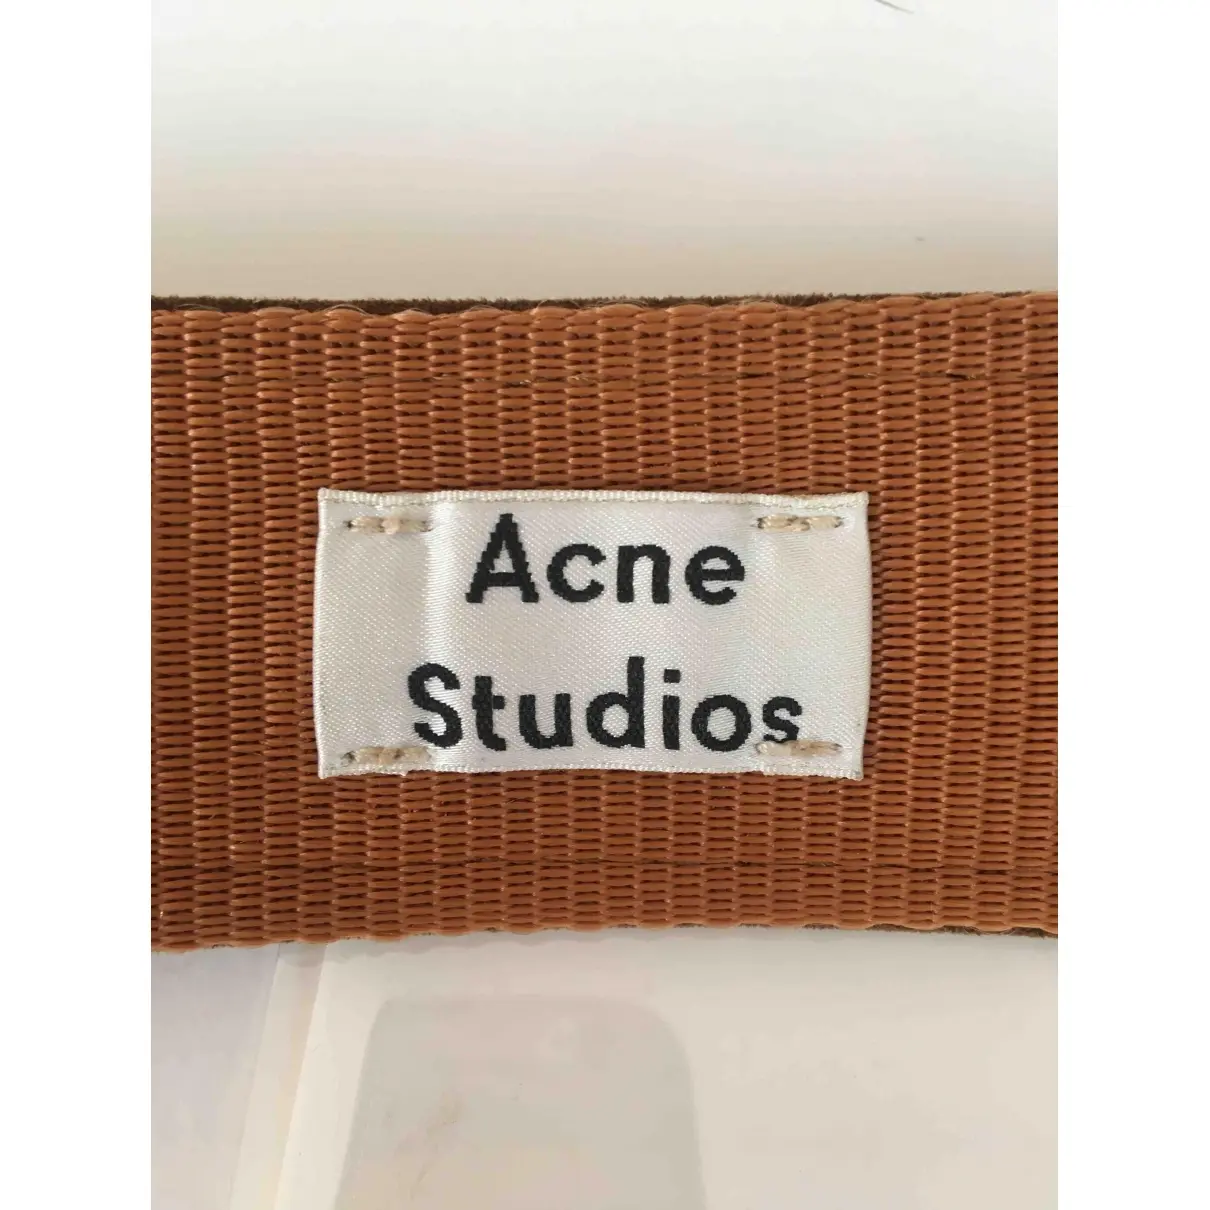 Buy Acne Studios Cloth belt online